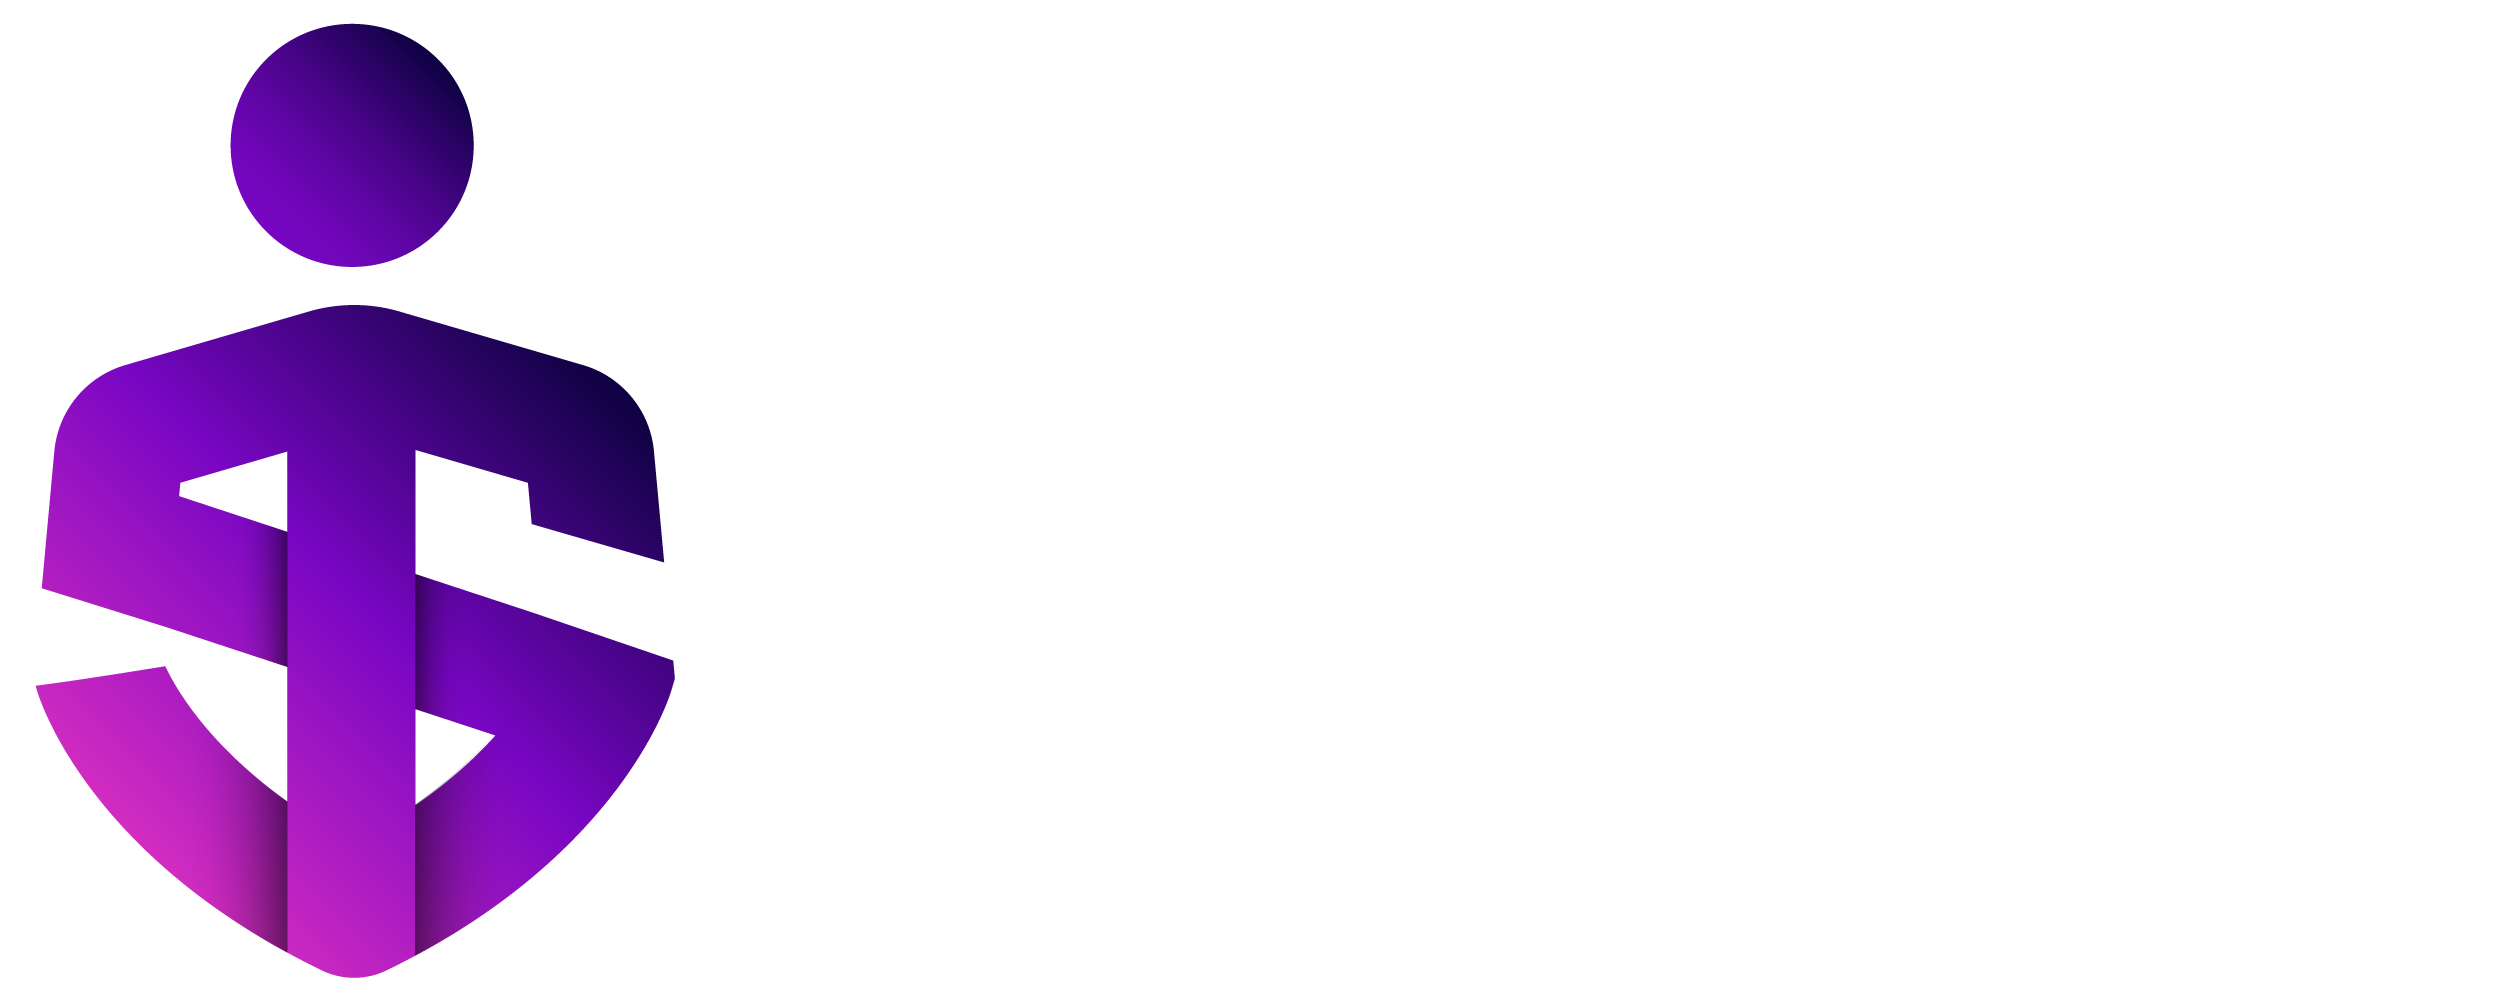 Scouting talent logo